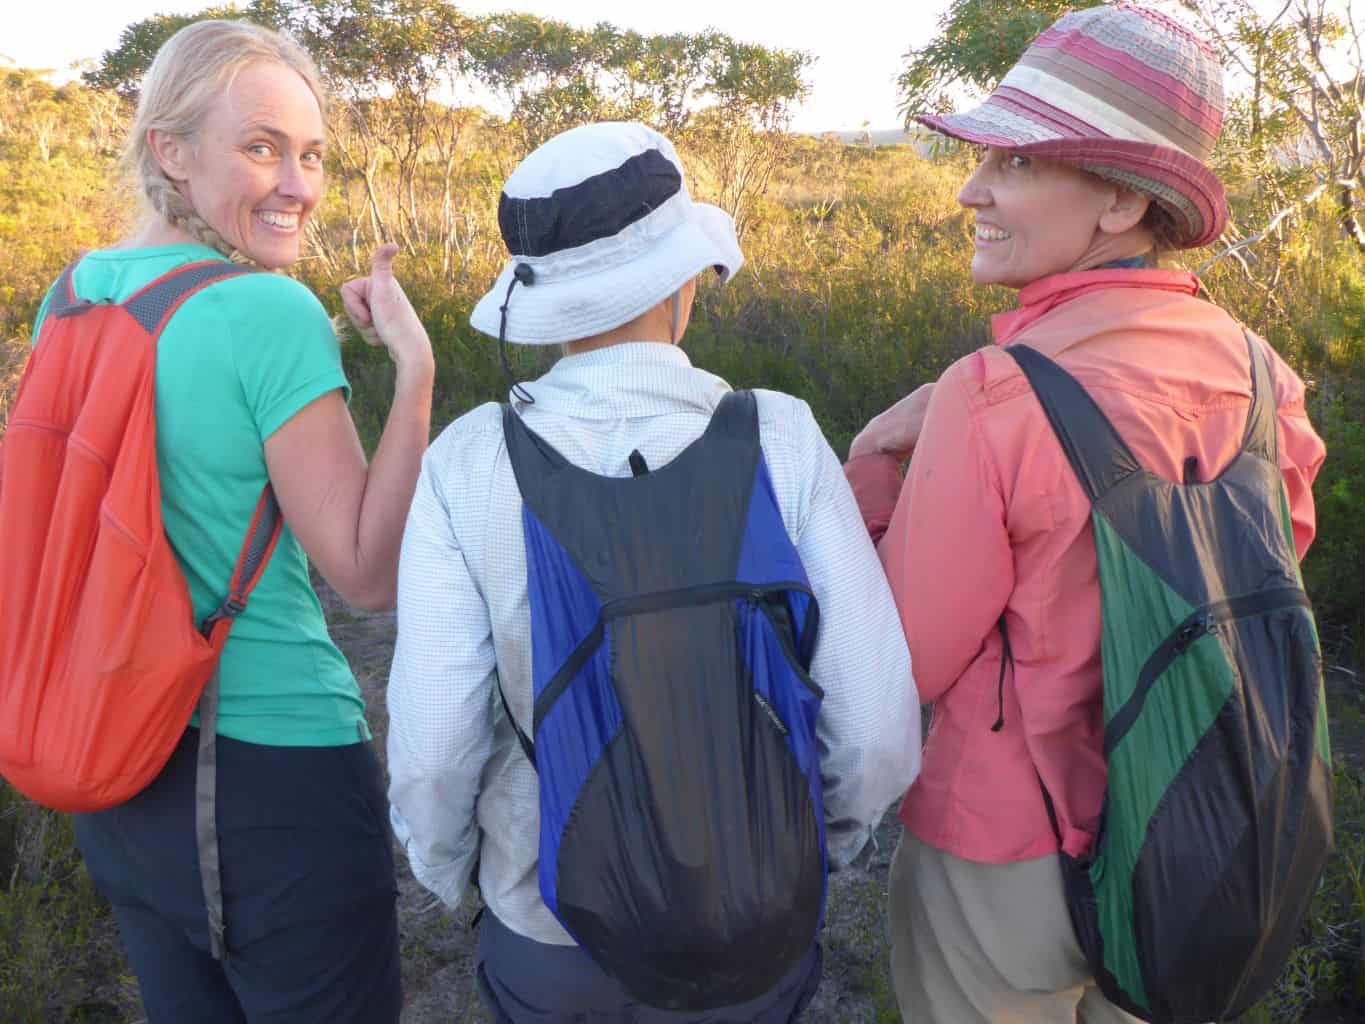 Hiking Gear to Make Life Easier - Foldable Lightweight backpacks